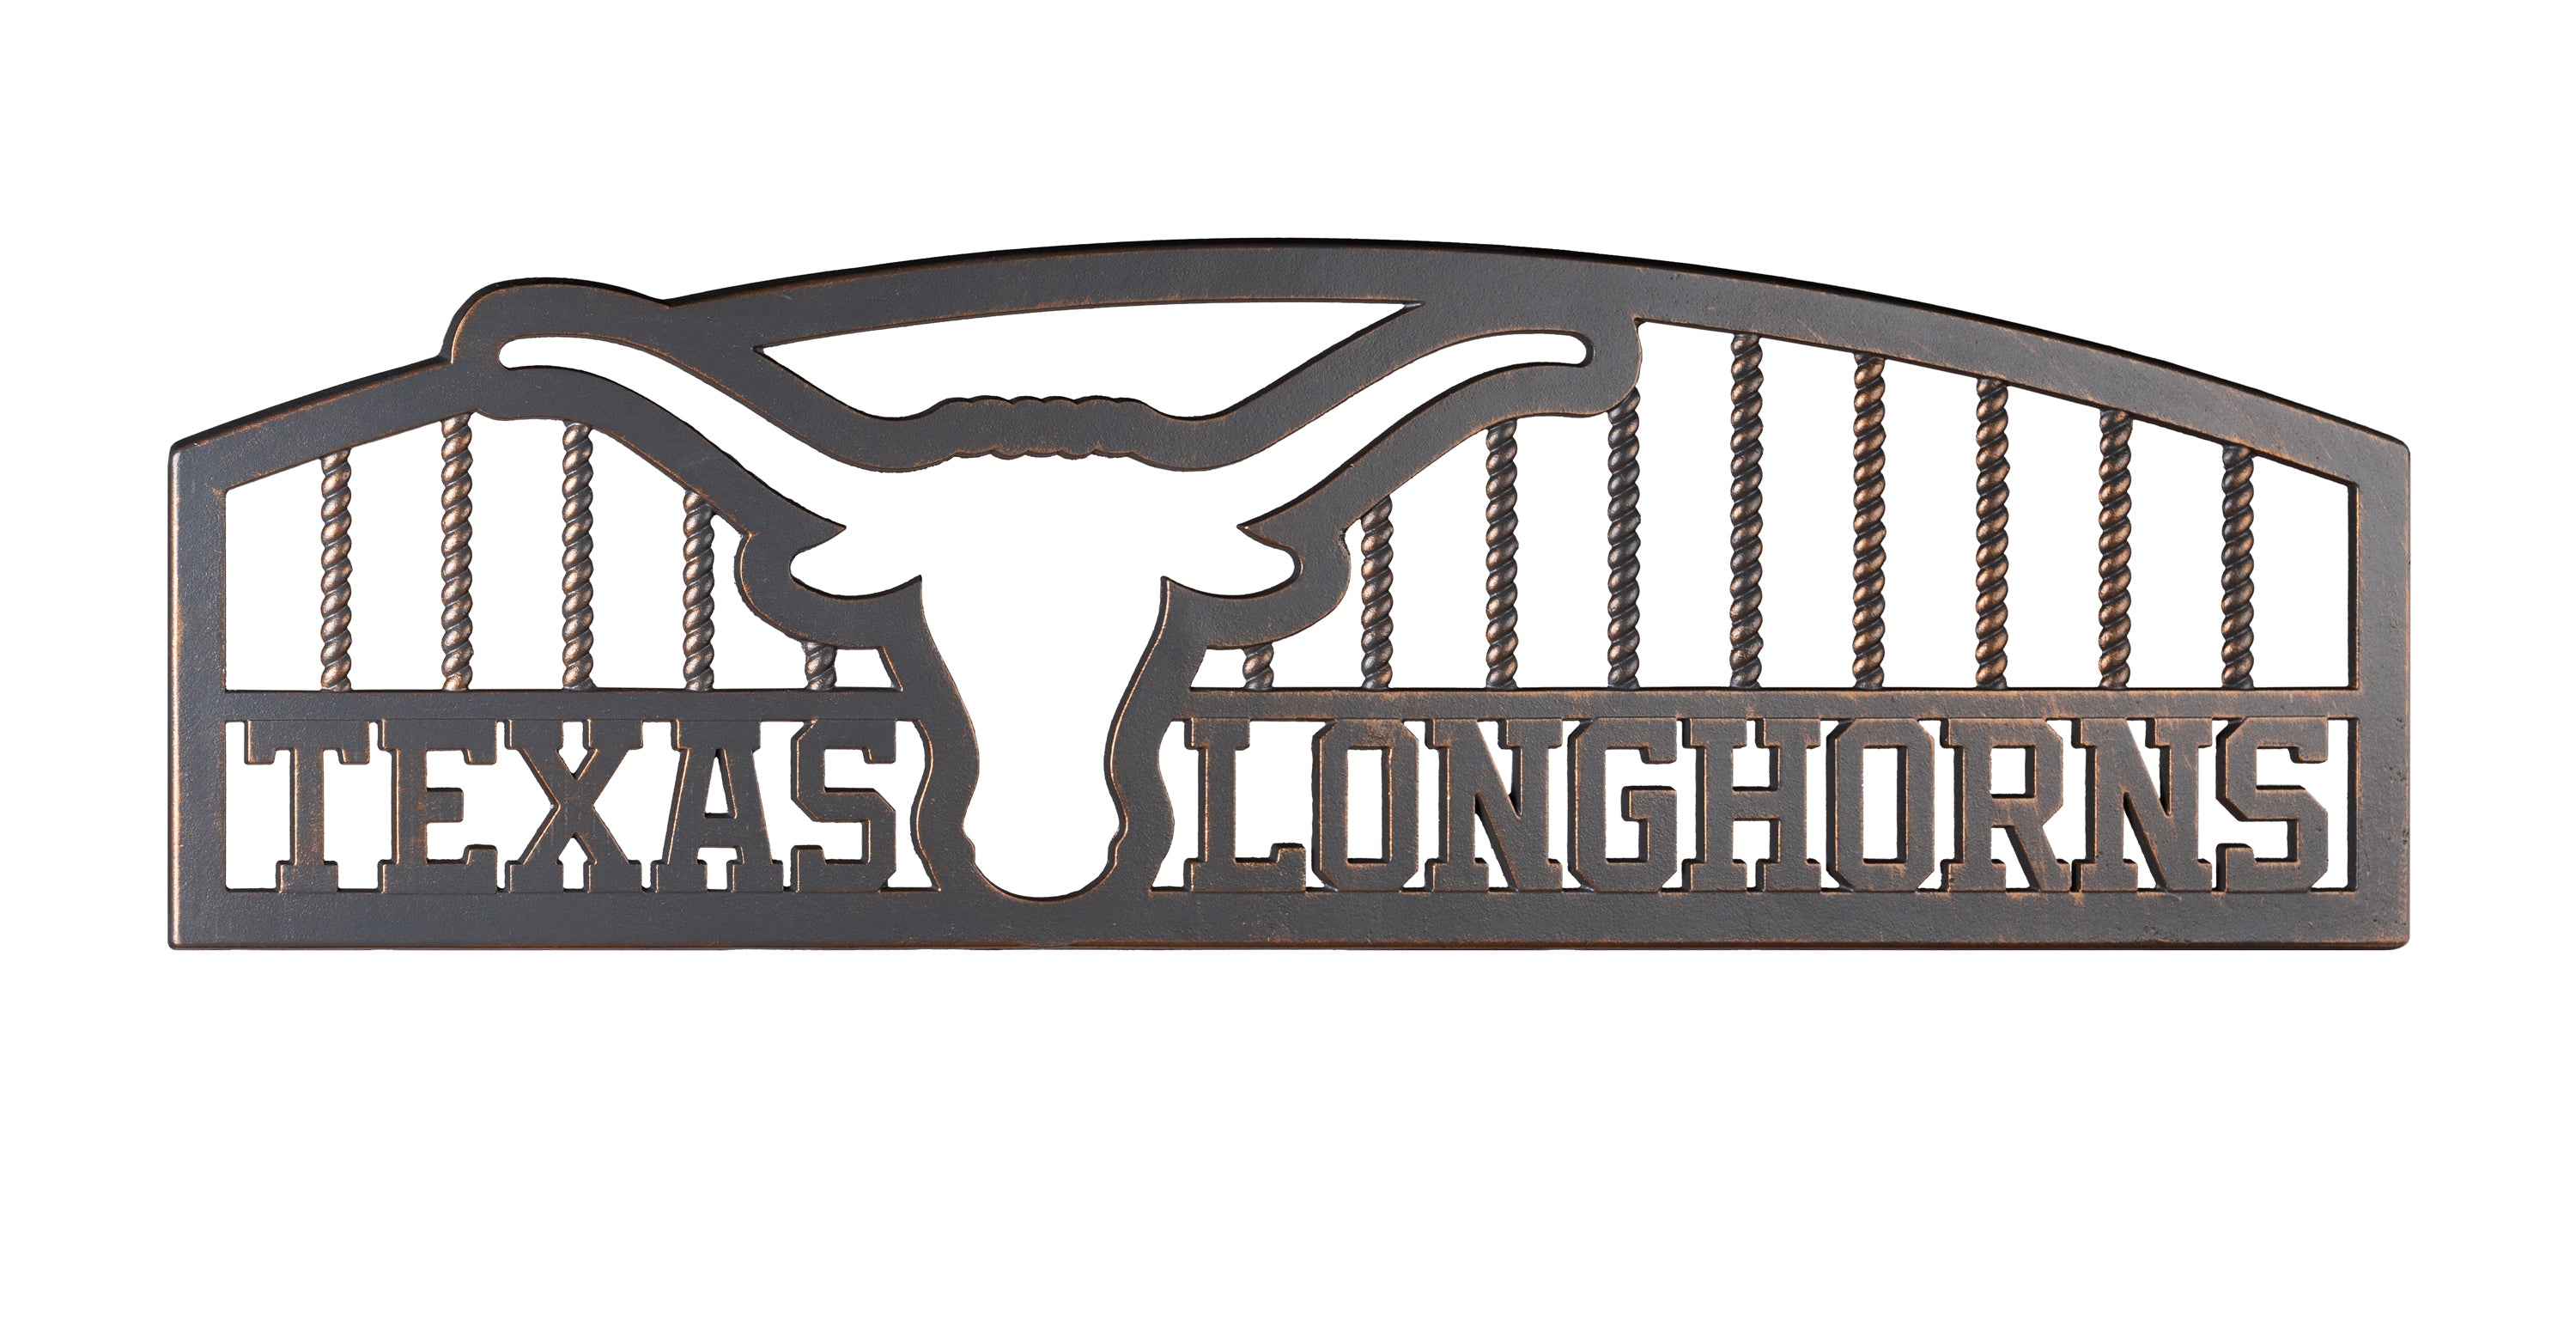 University of Texas Longhorns Bench